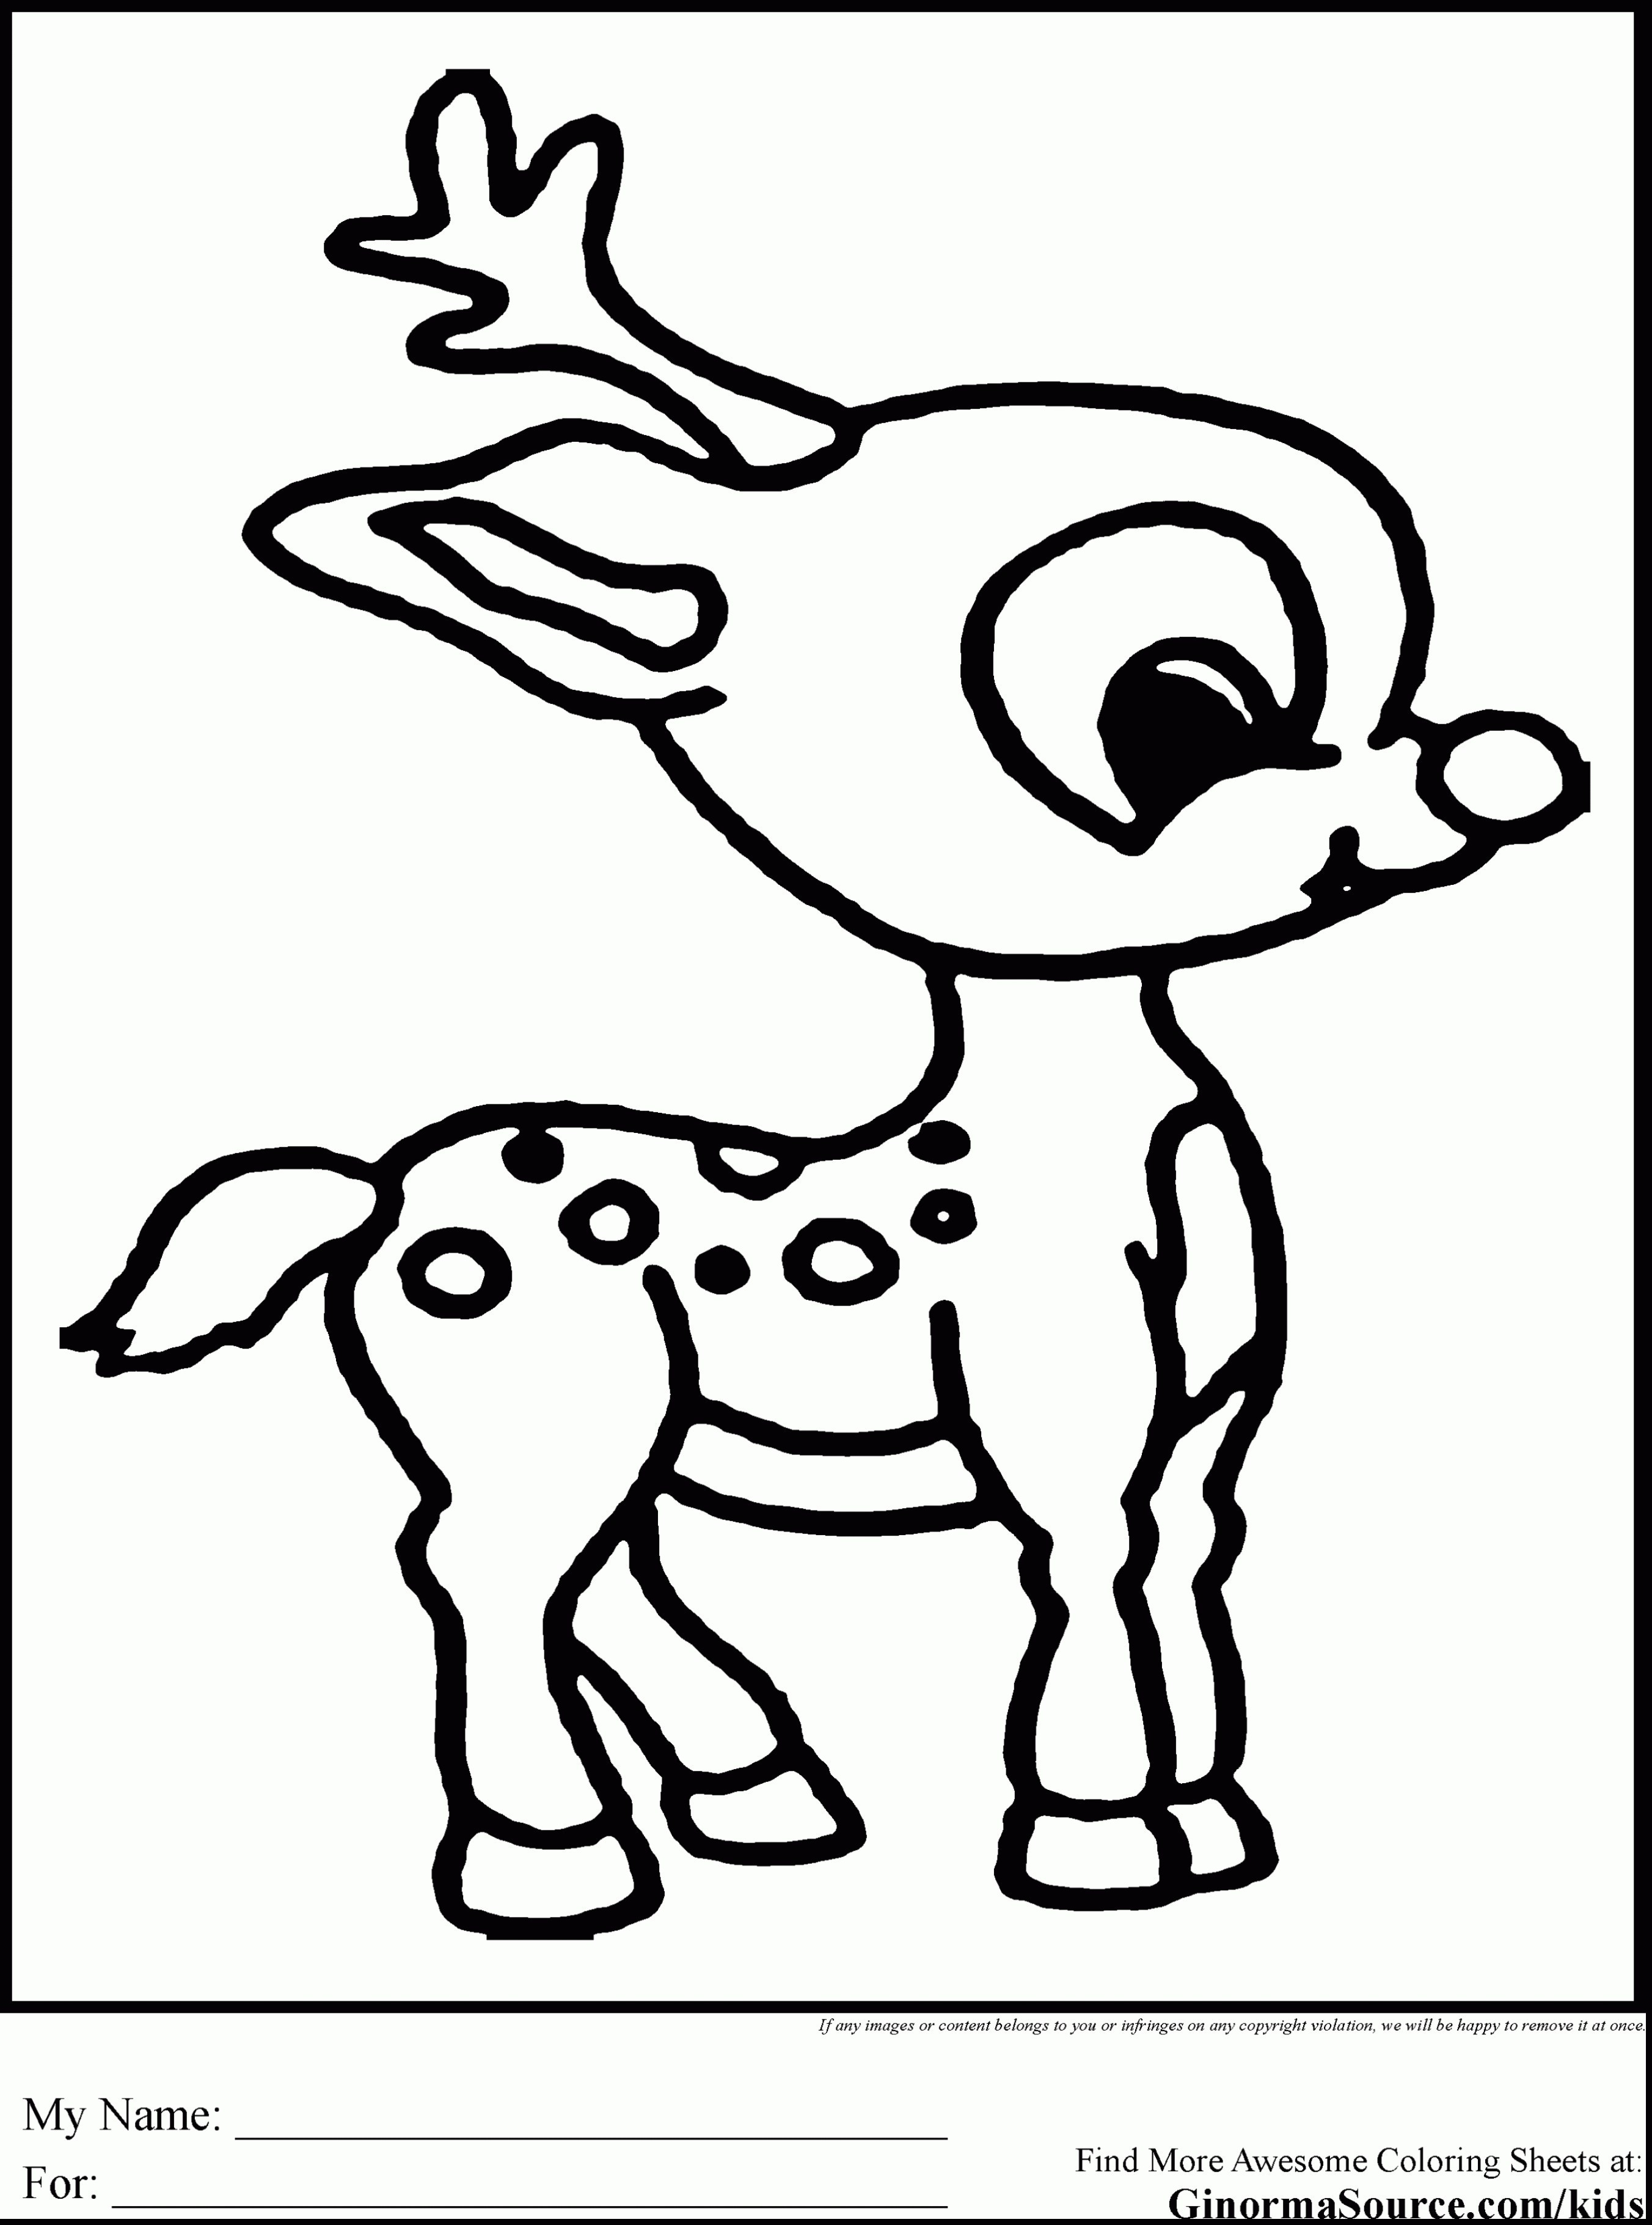 Reindeer Cartoon Coloring Pages at GetColorings.com | Free printable